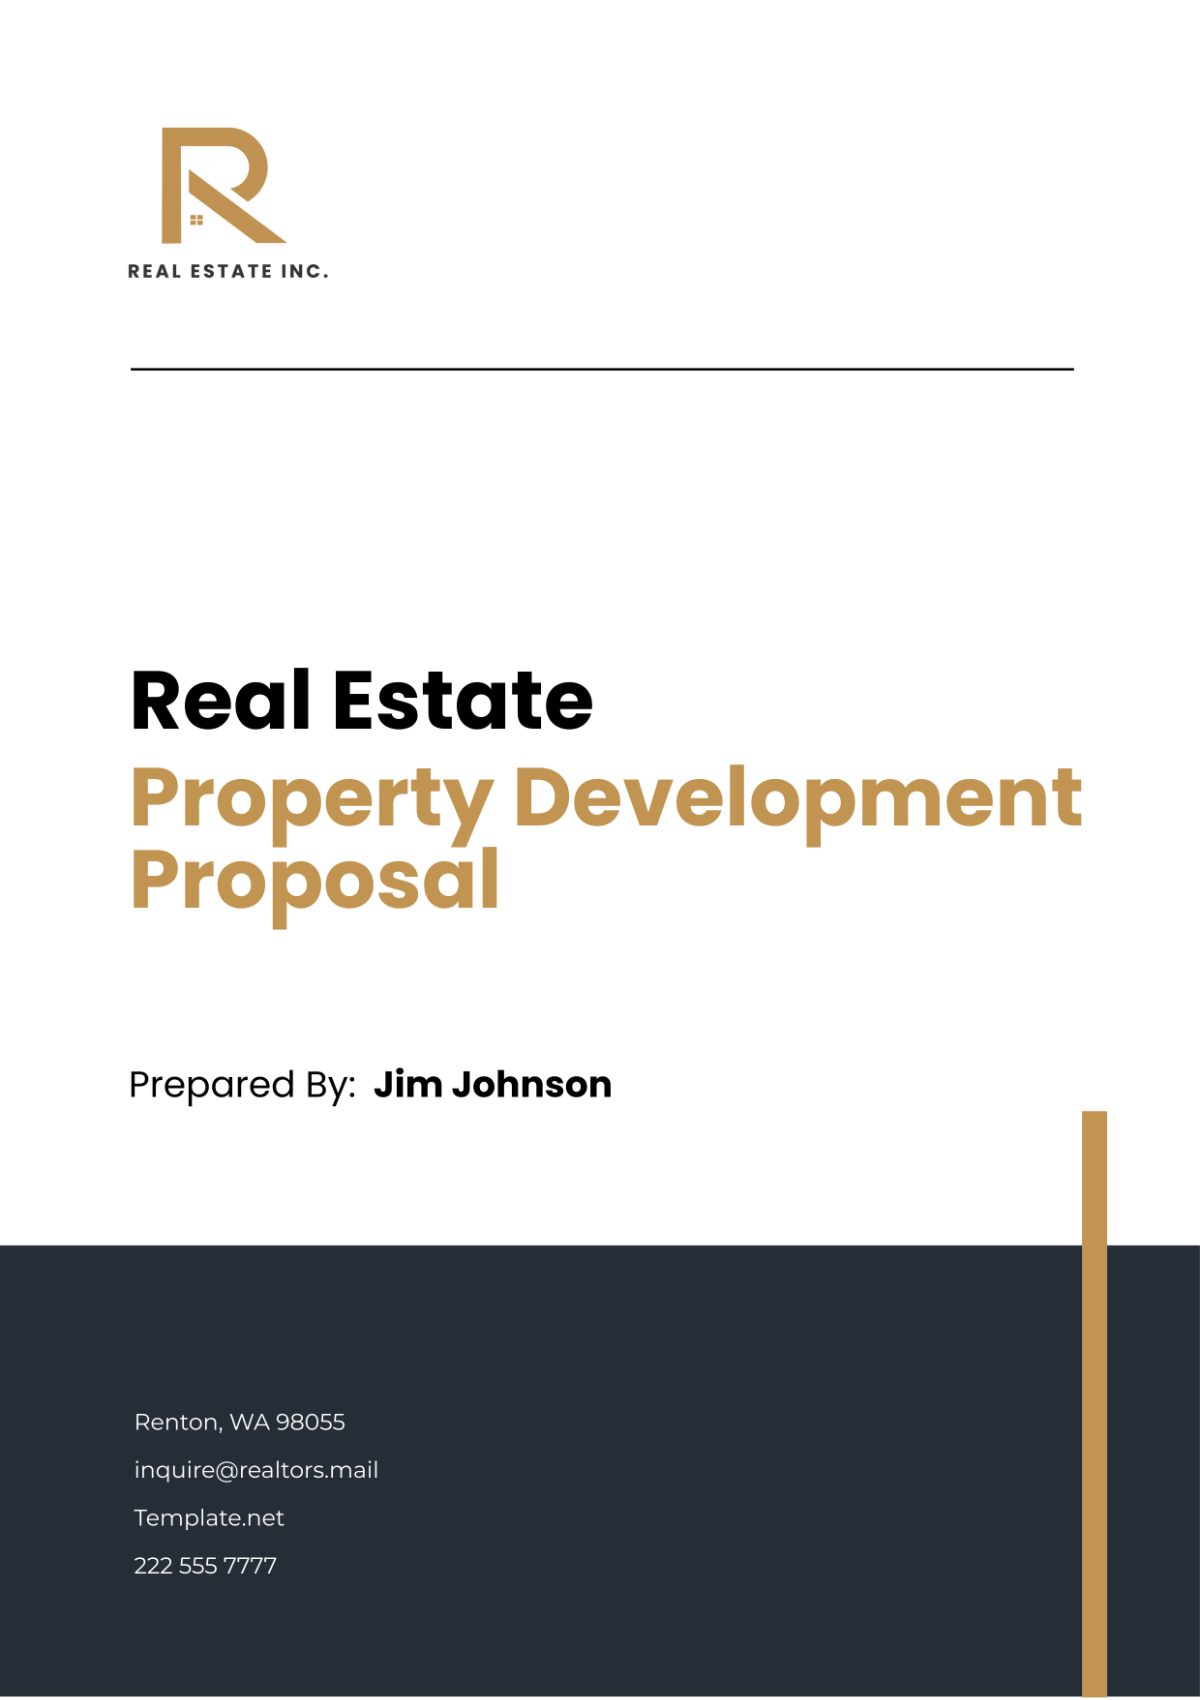 Real Estate Property Development Proposal Template